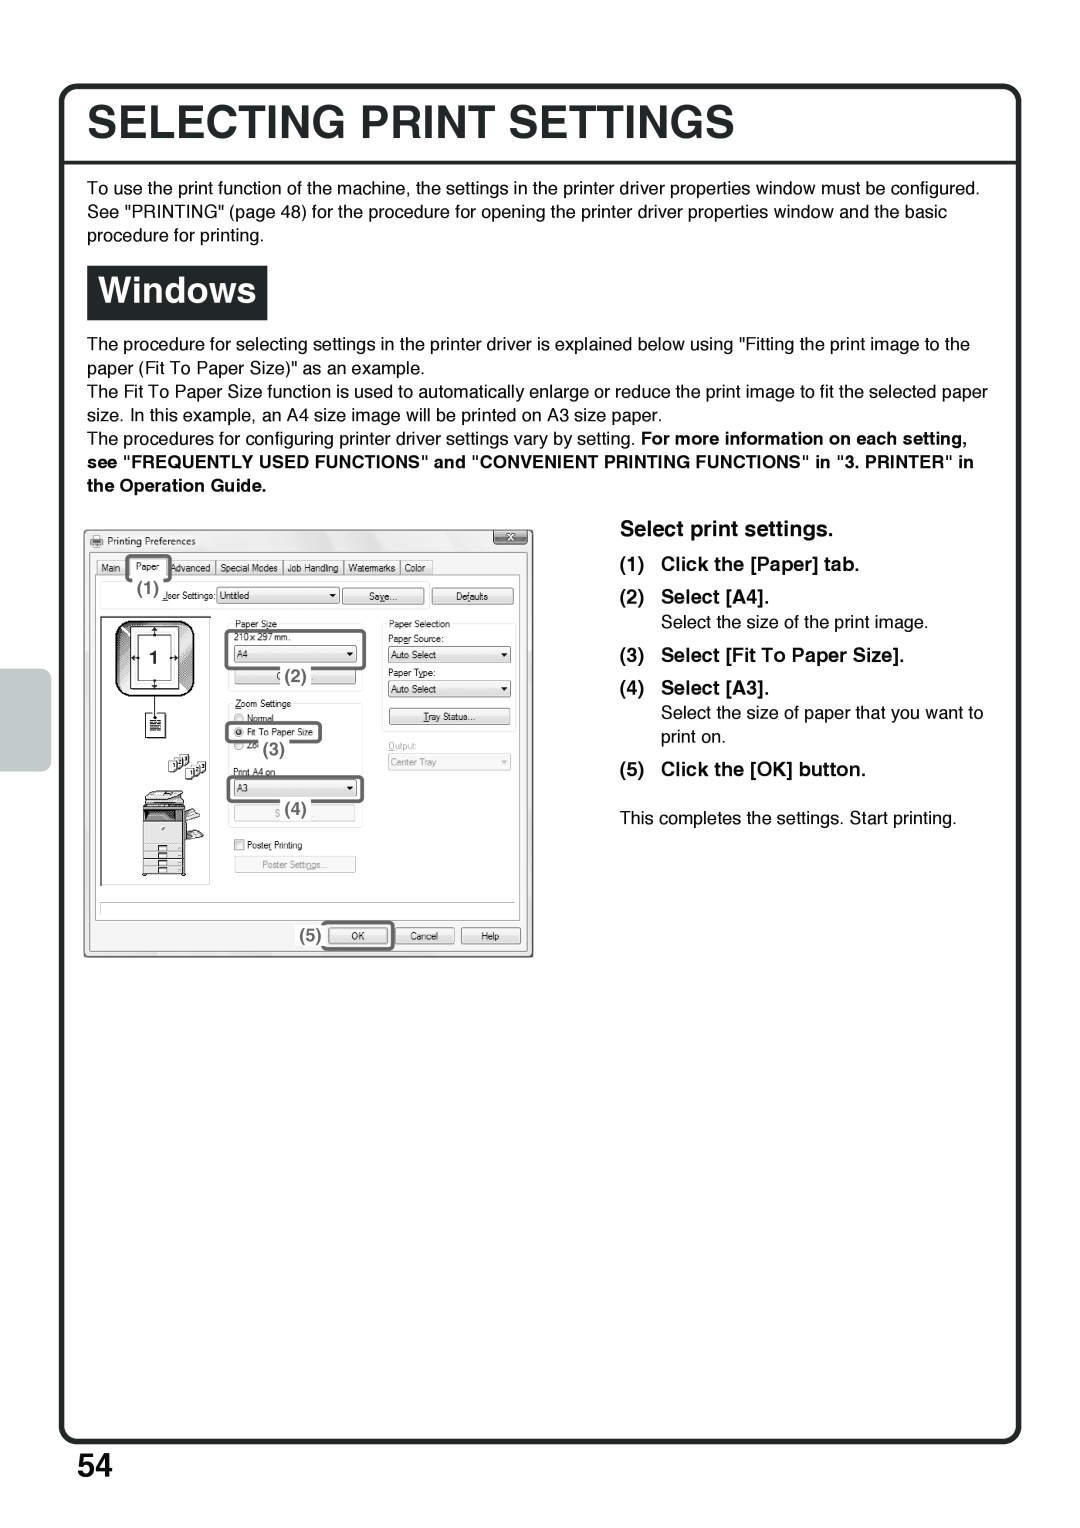 Sharp MX-4100N Selecting Print Settings, Select print settings, Windows, Click the Paper tab, Select A4, Select A3 